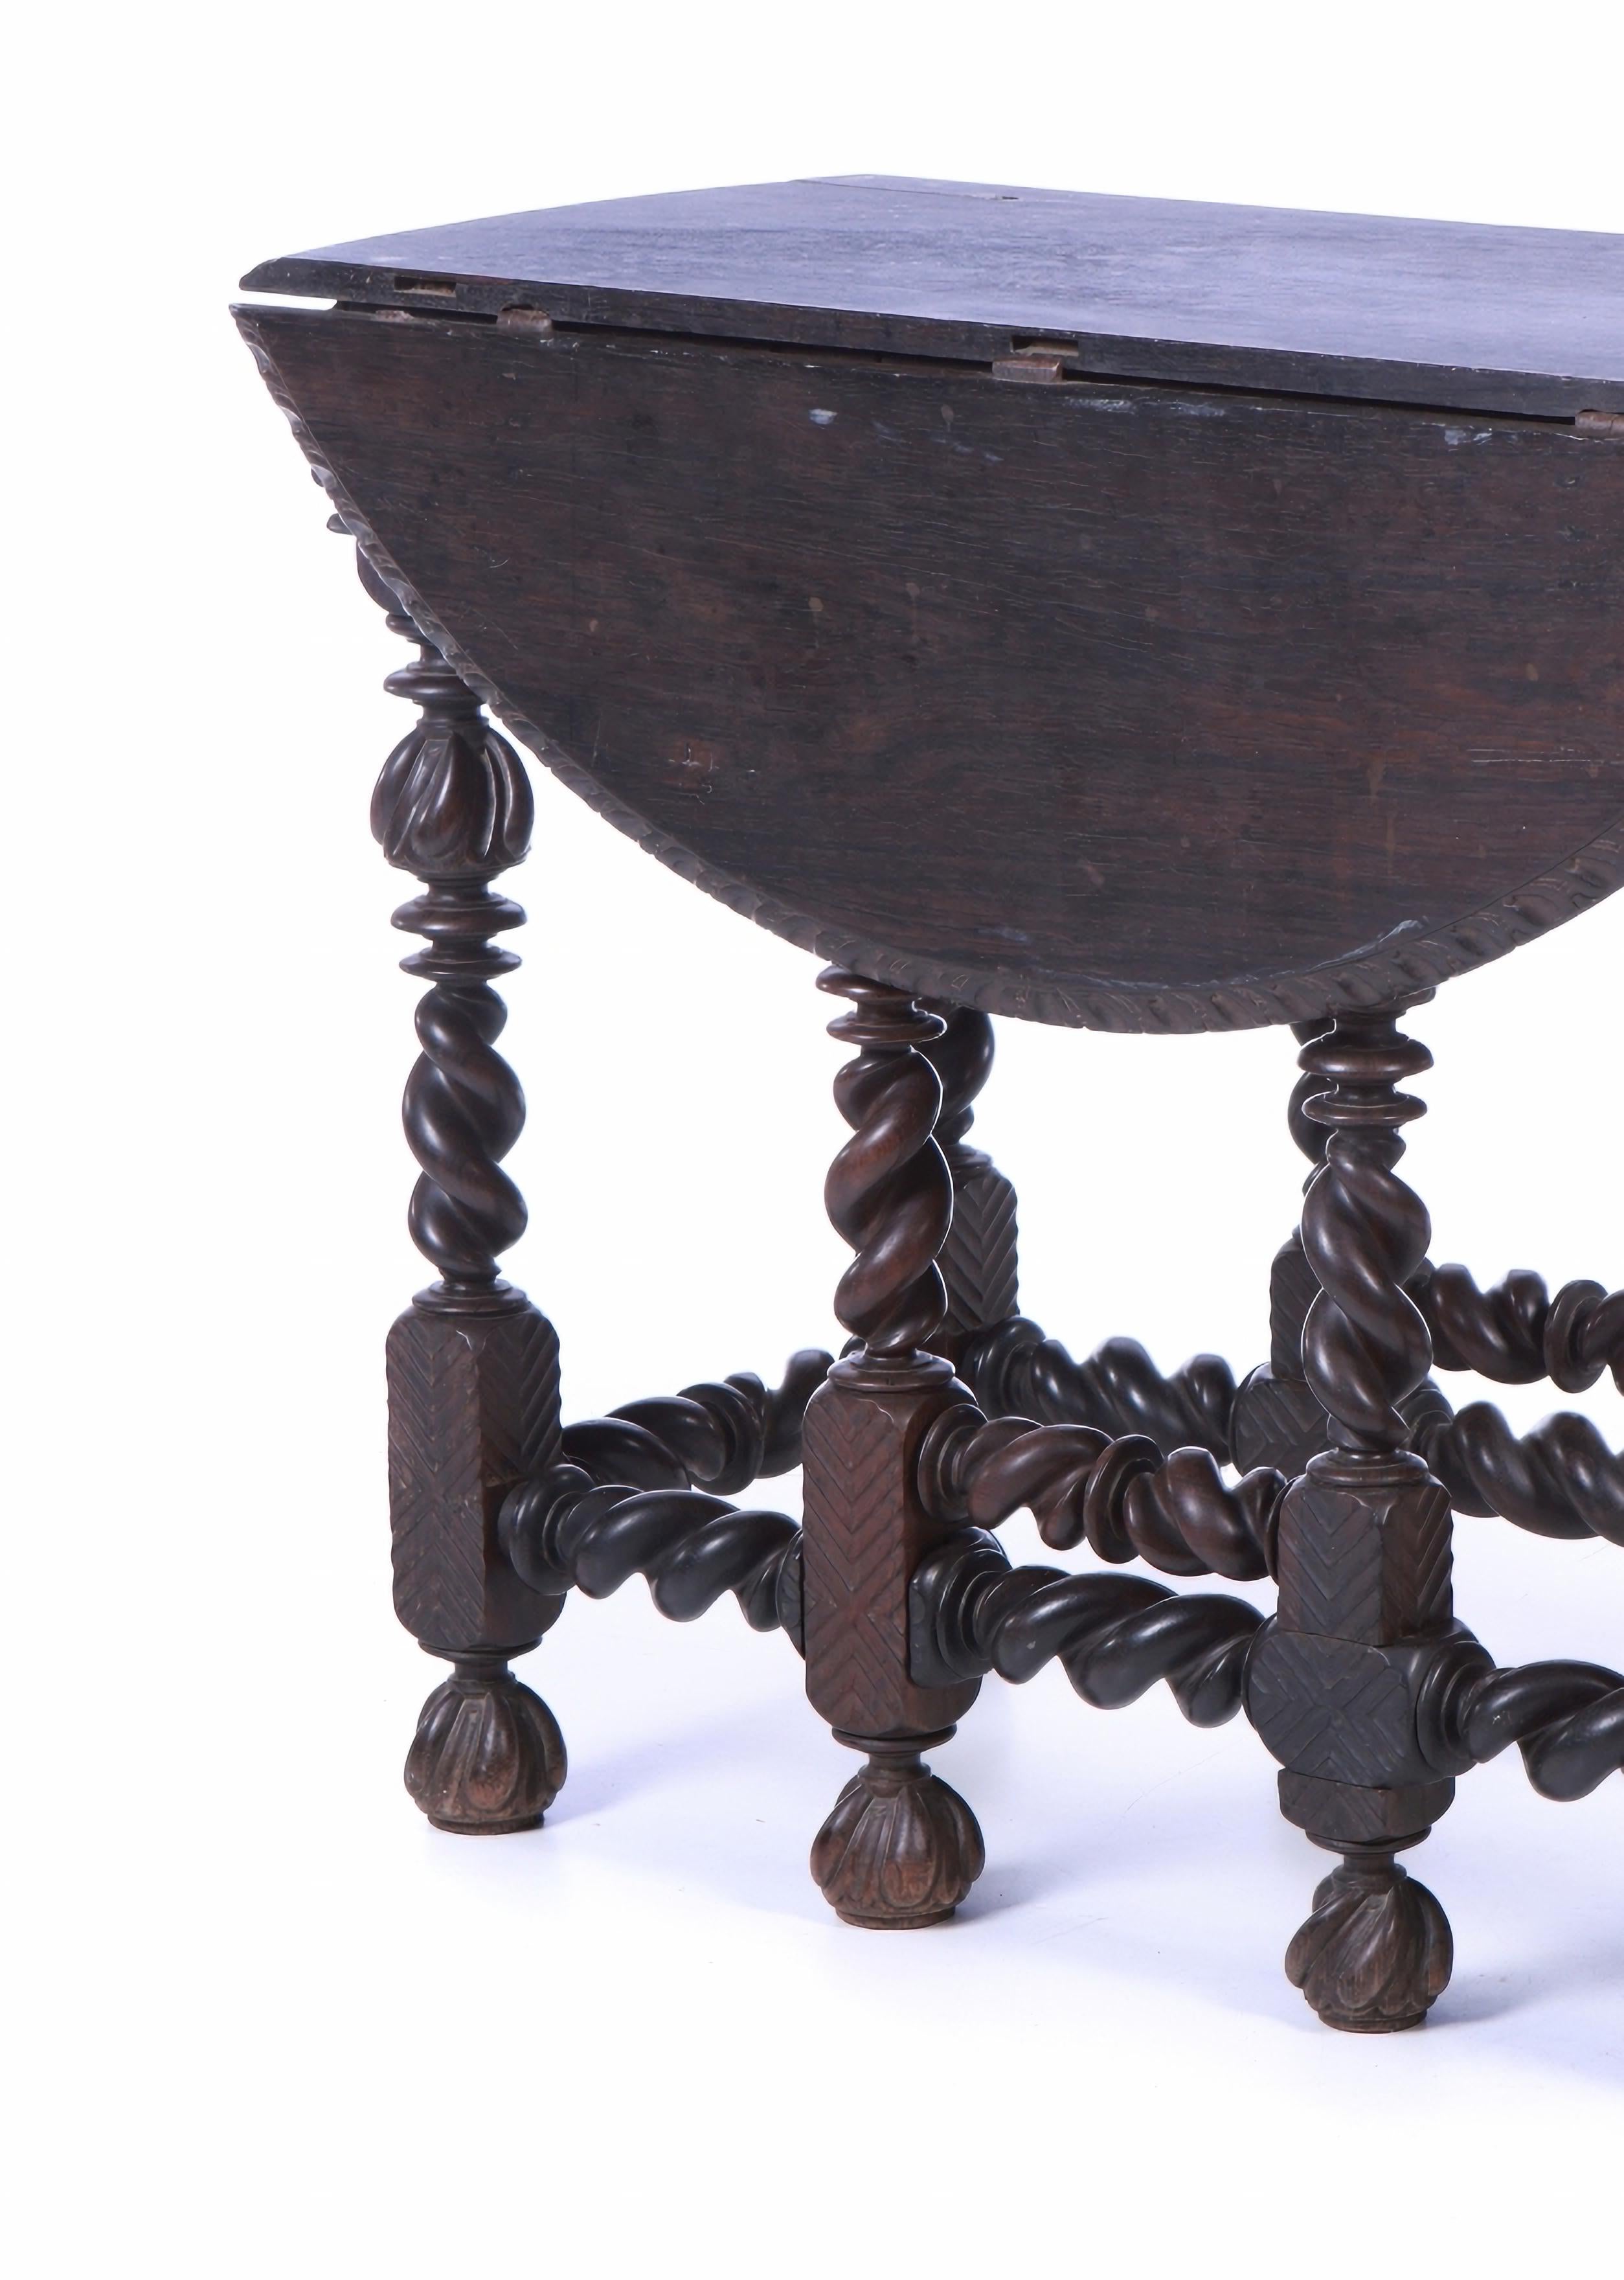 Baroque Table de table portugaise du XVIIe siècle